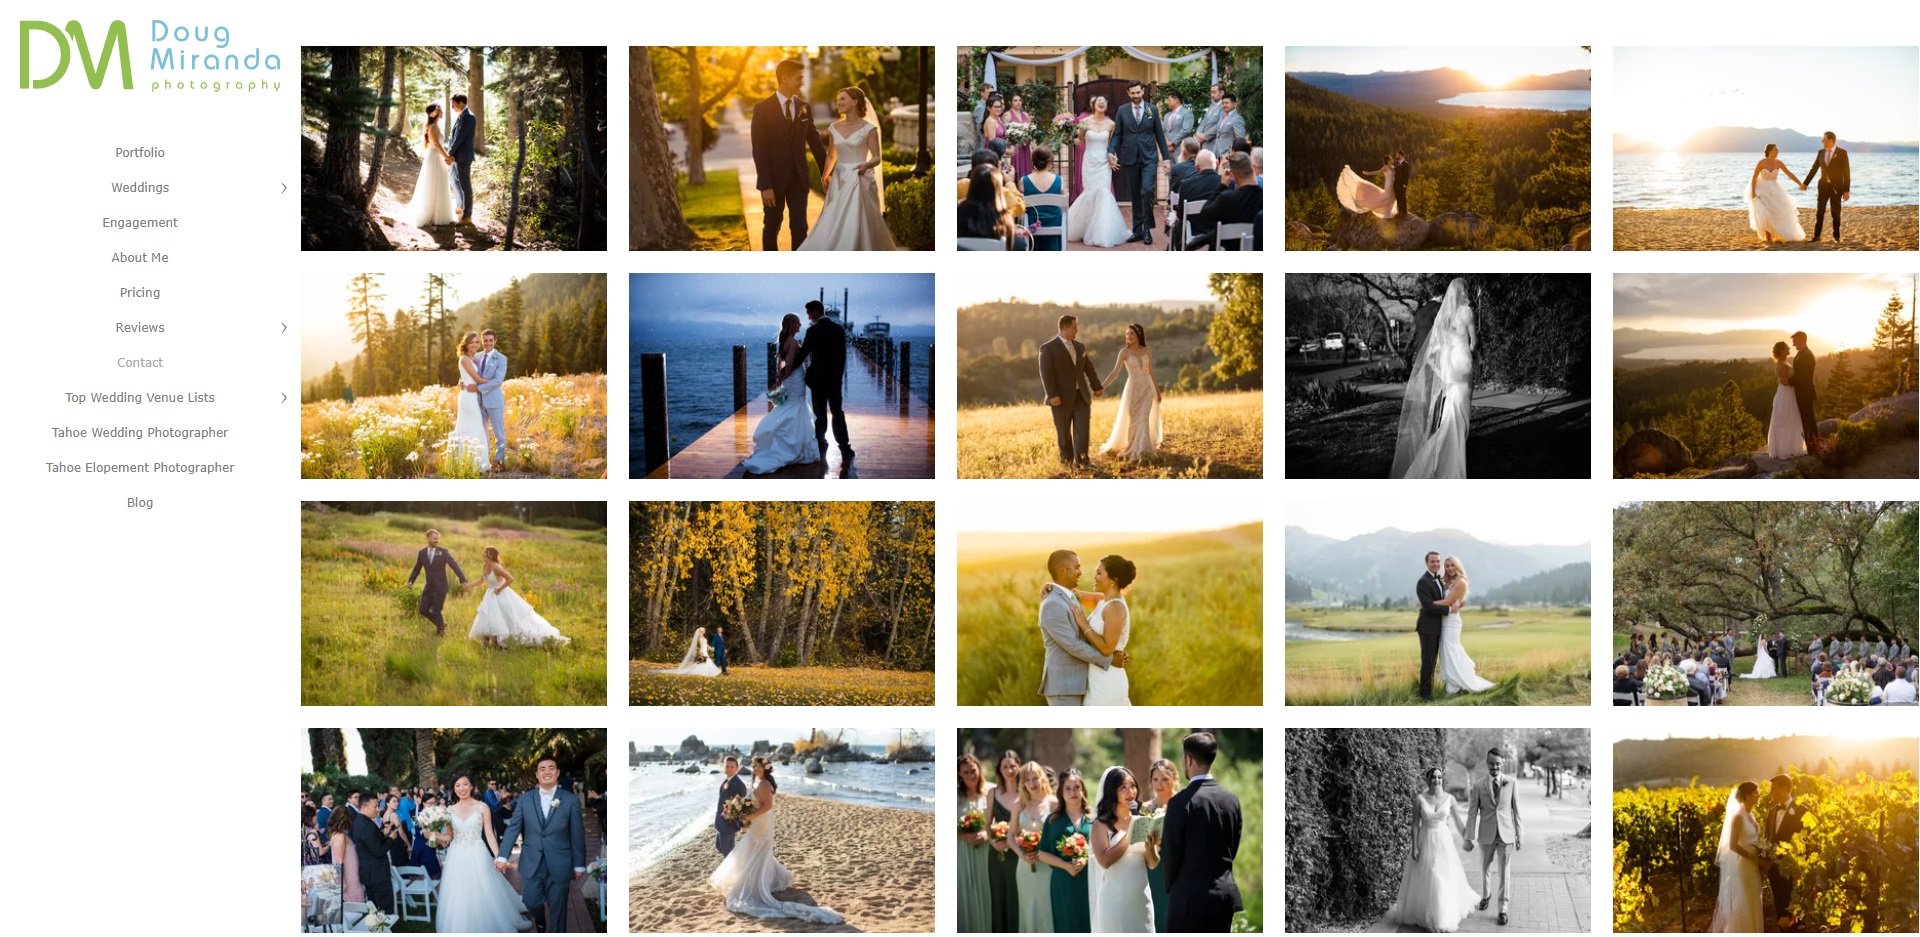 5 Best Wedding Photographers in Sacramento, CA